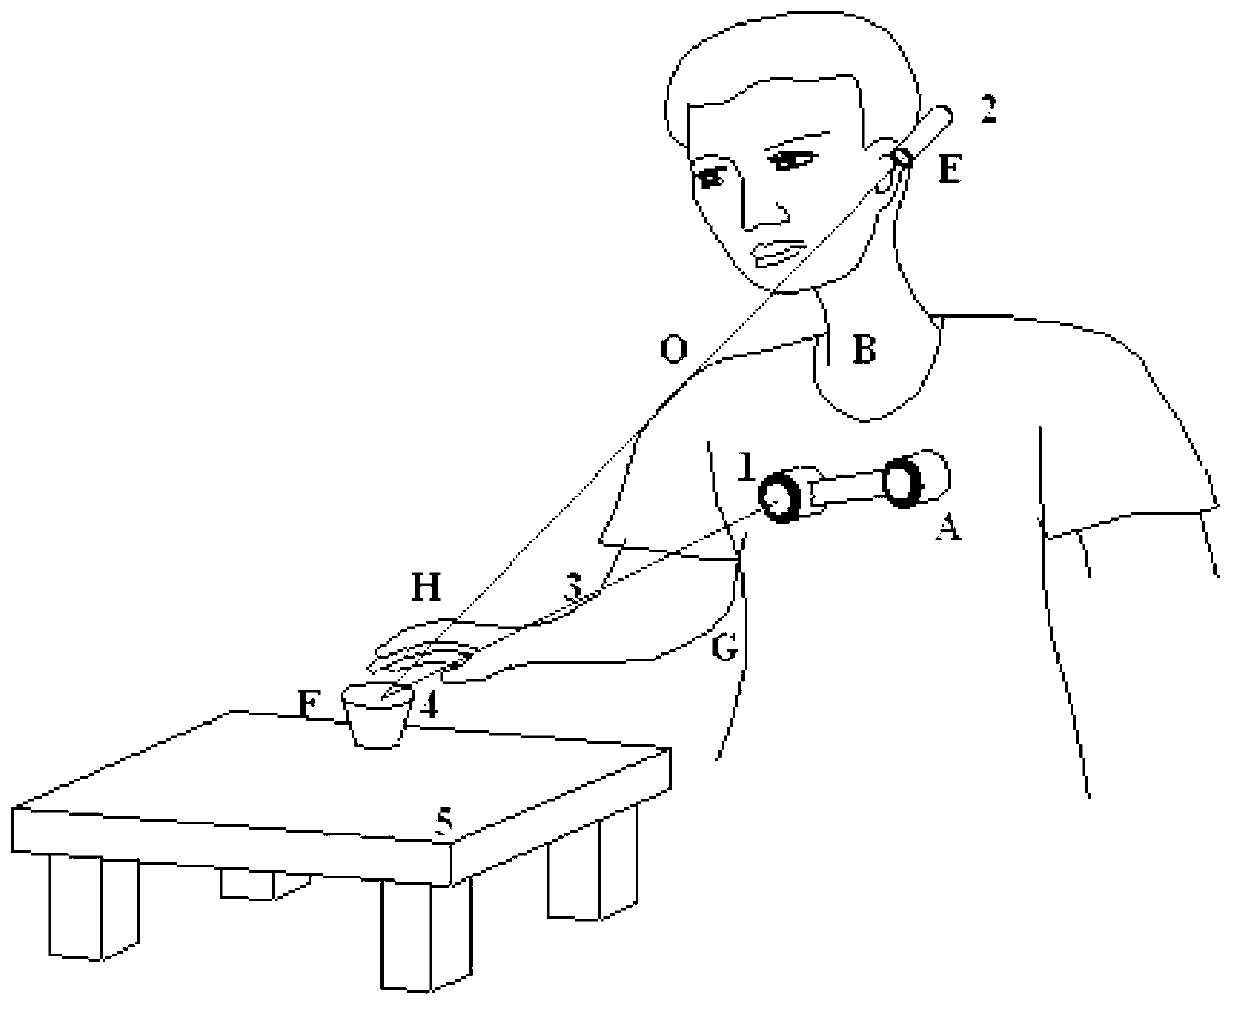 Man-machine interactive manipulator control system and method based on binocular vision